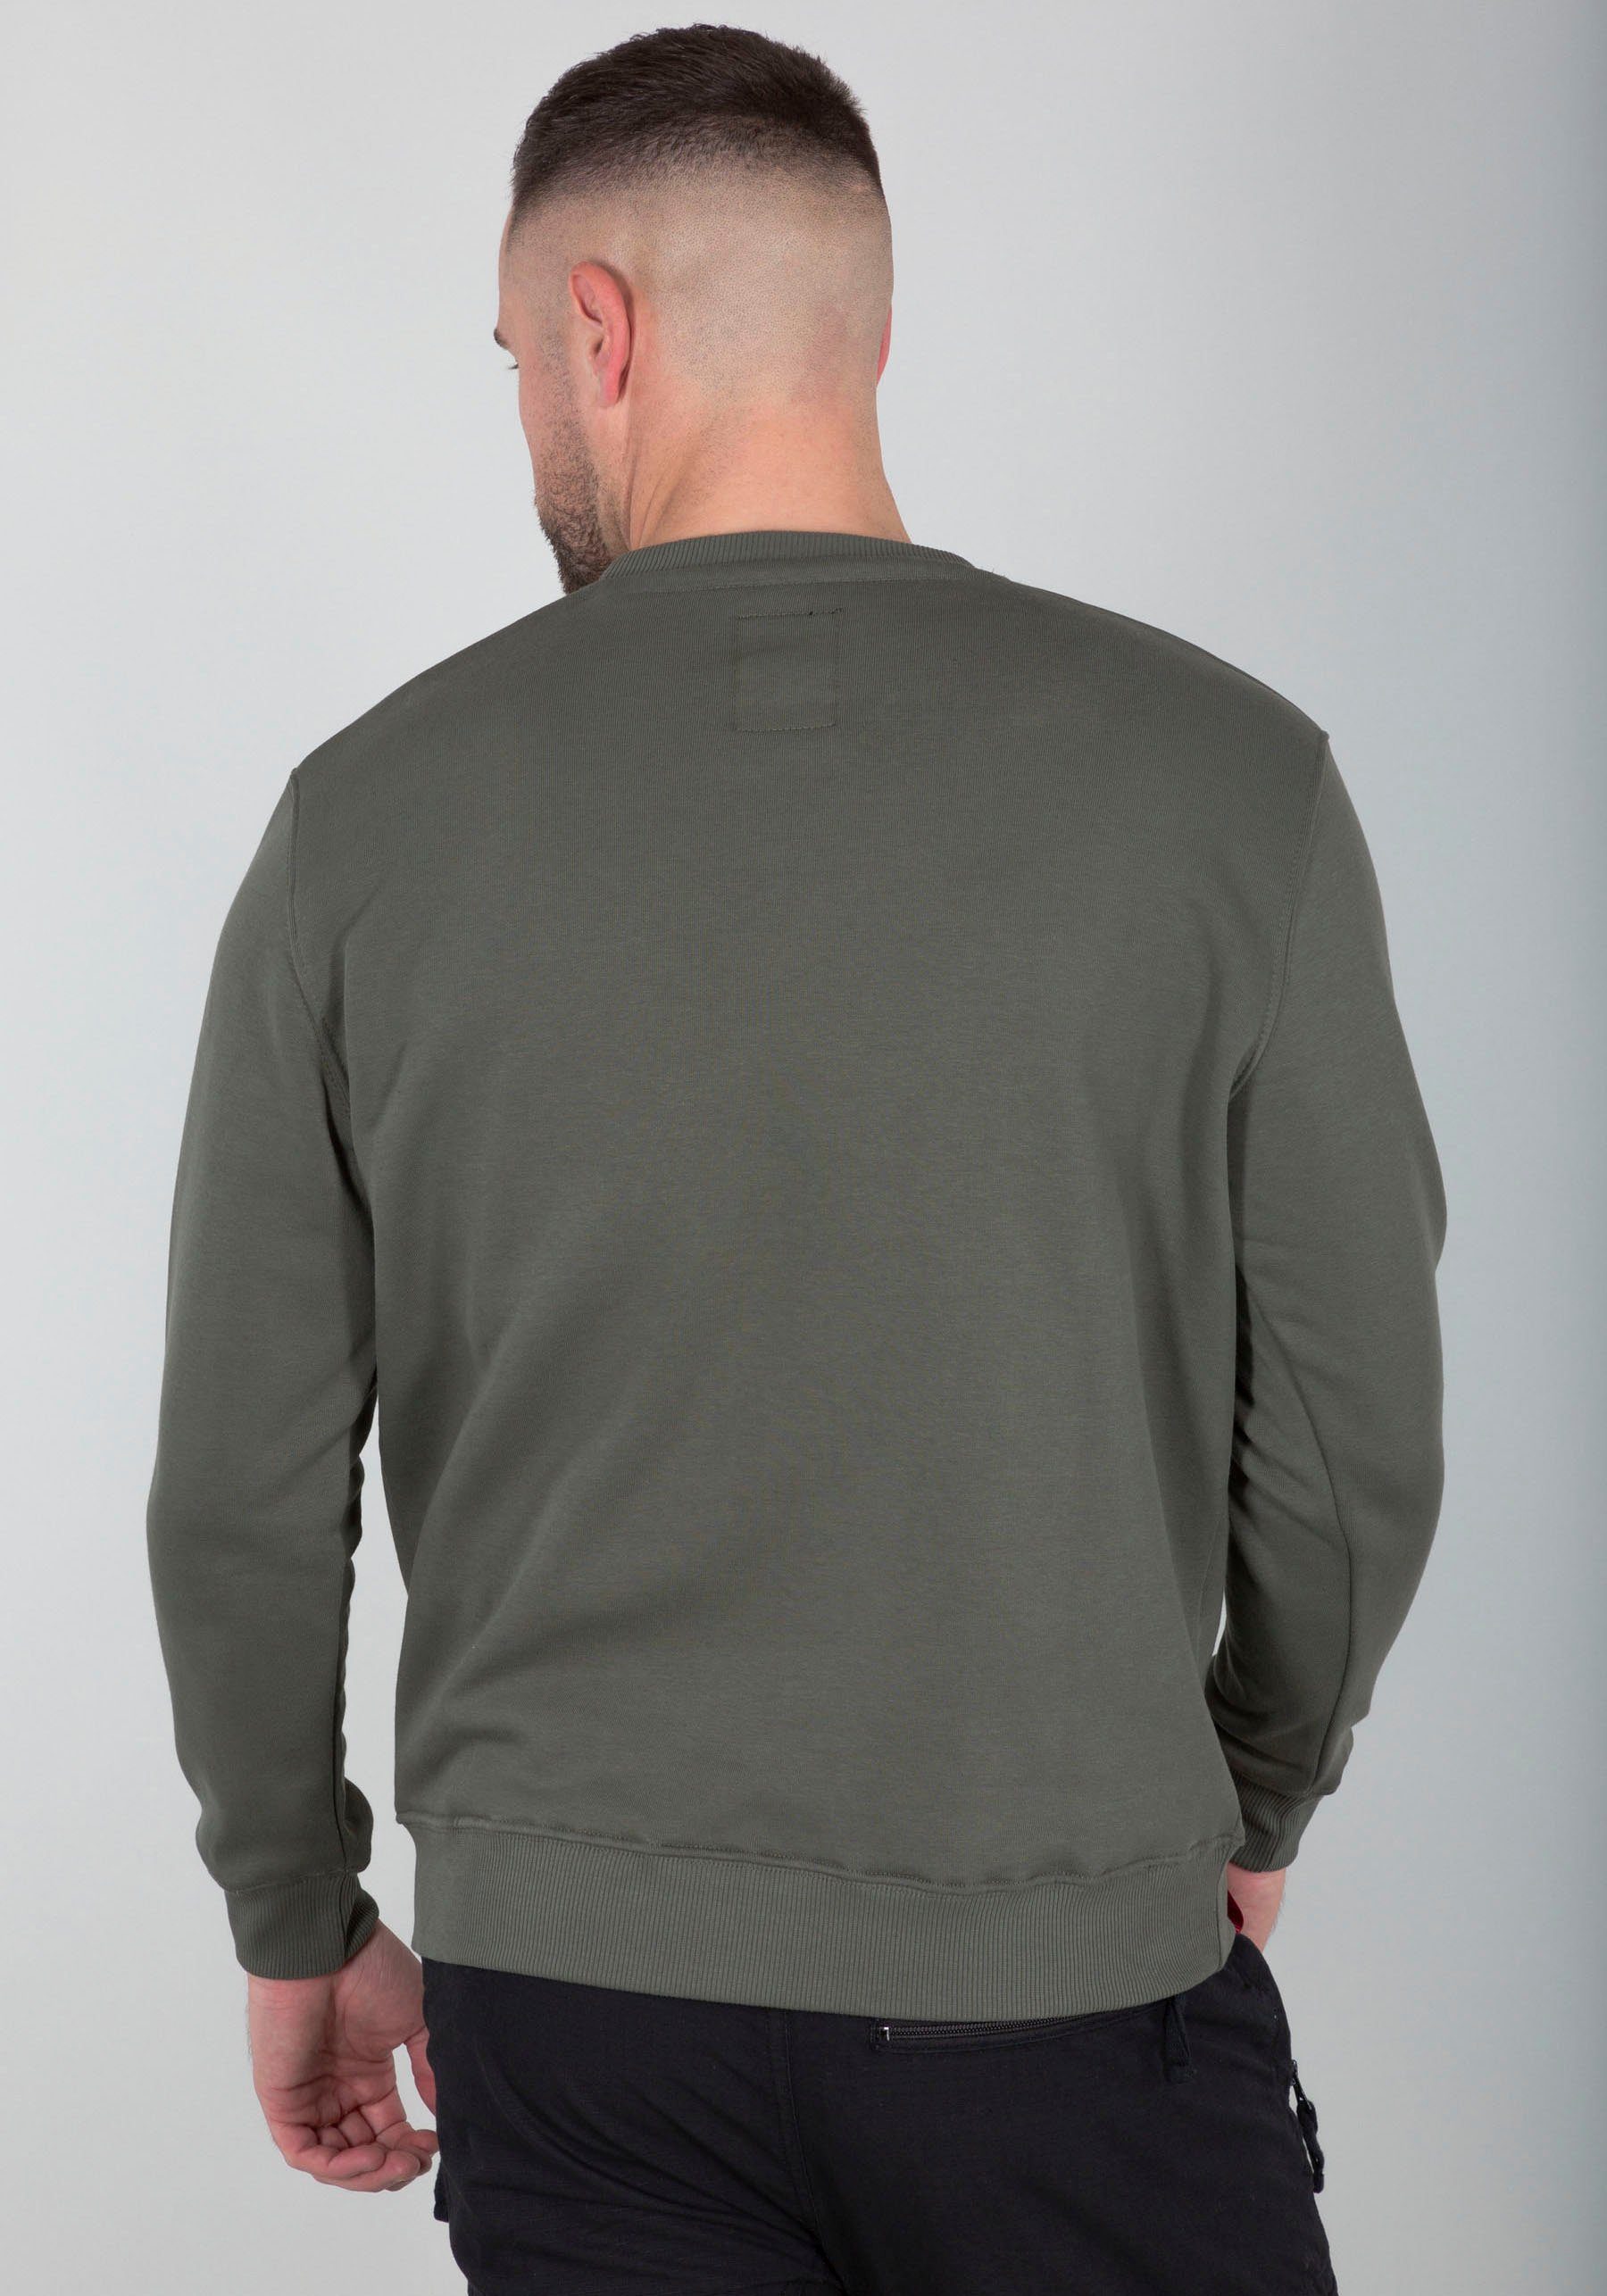 Alpha Industries Sweatshirt Basic Sweater olive dark